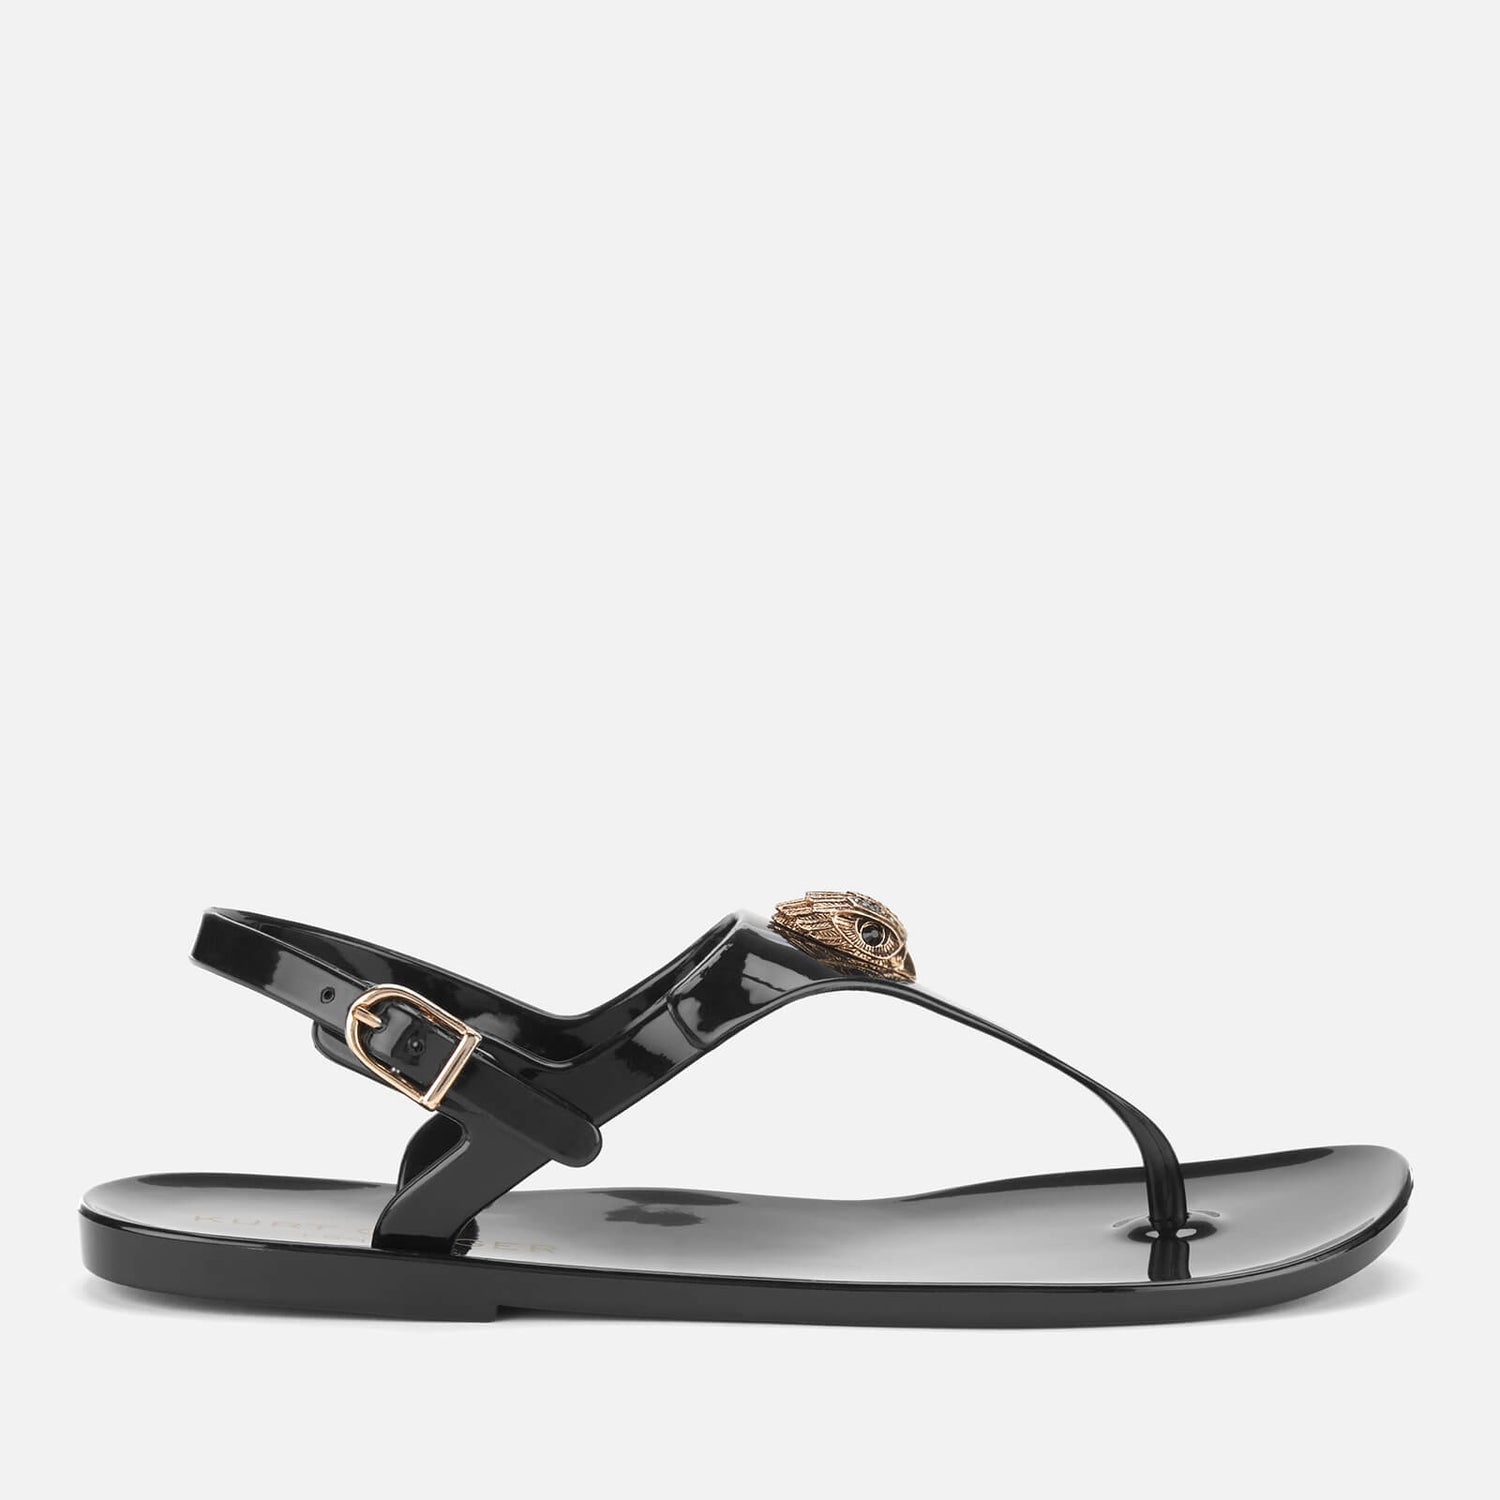 Kurt Geiger London Women's Maddison Flat Sandals - Black | TheHut.com